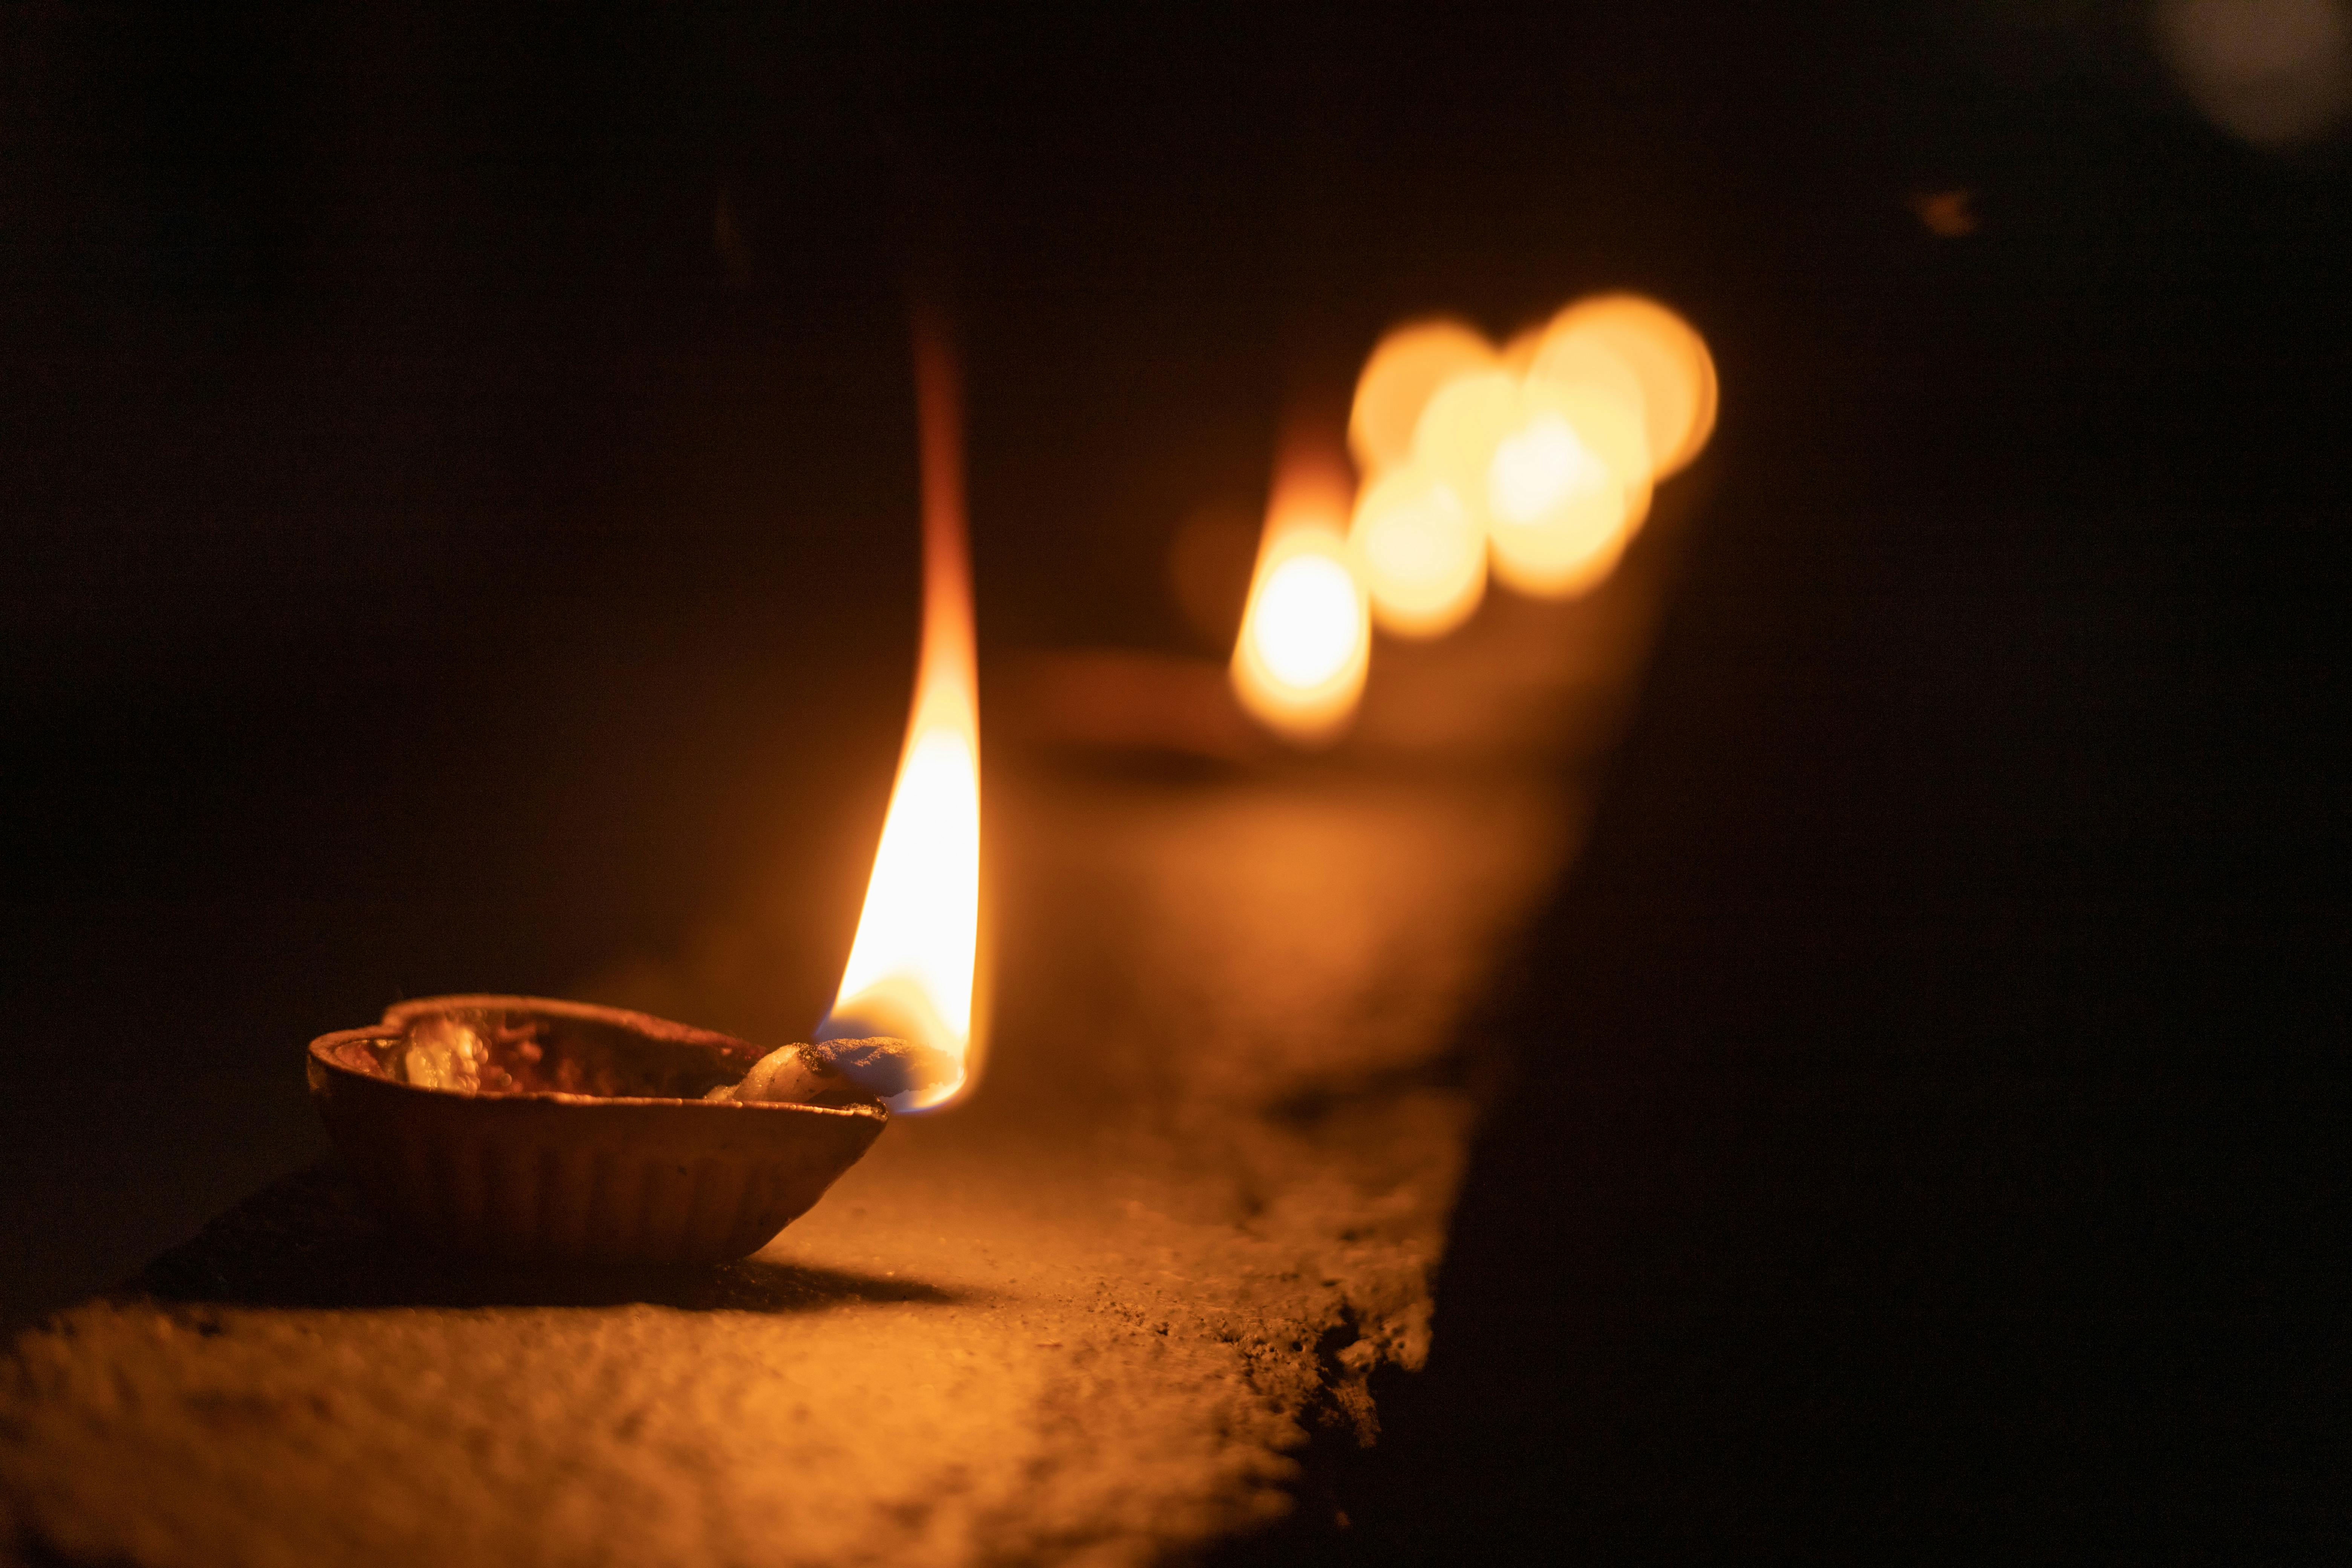 36900 Diya Stock Photos Pictures  RoyaltyFree Images  iStock  Diya  lamp Diwali diya Diya eps